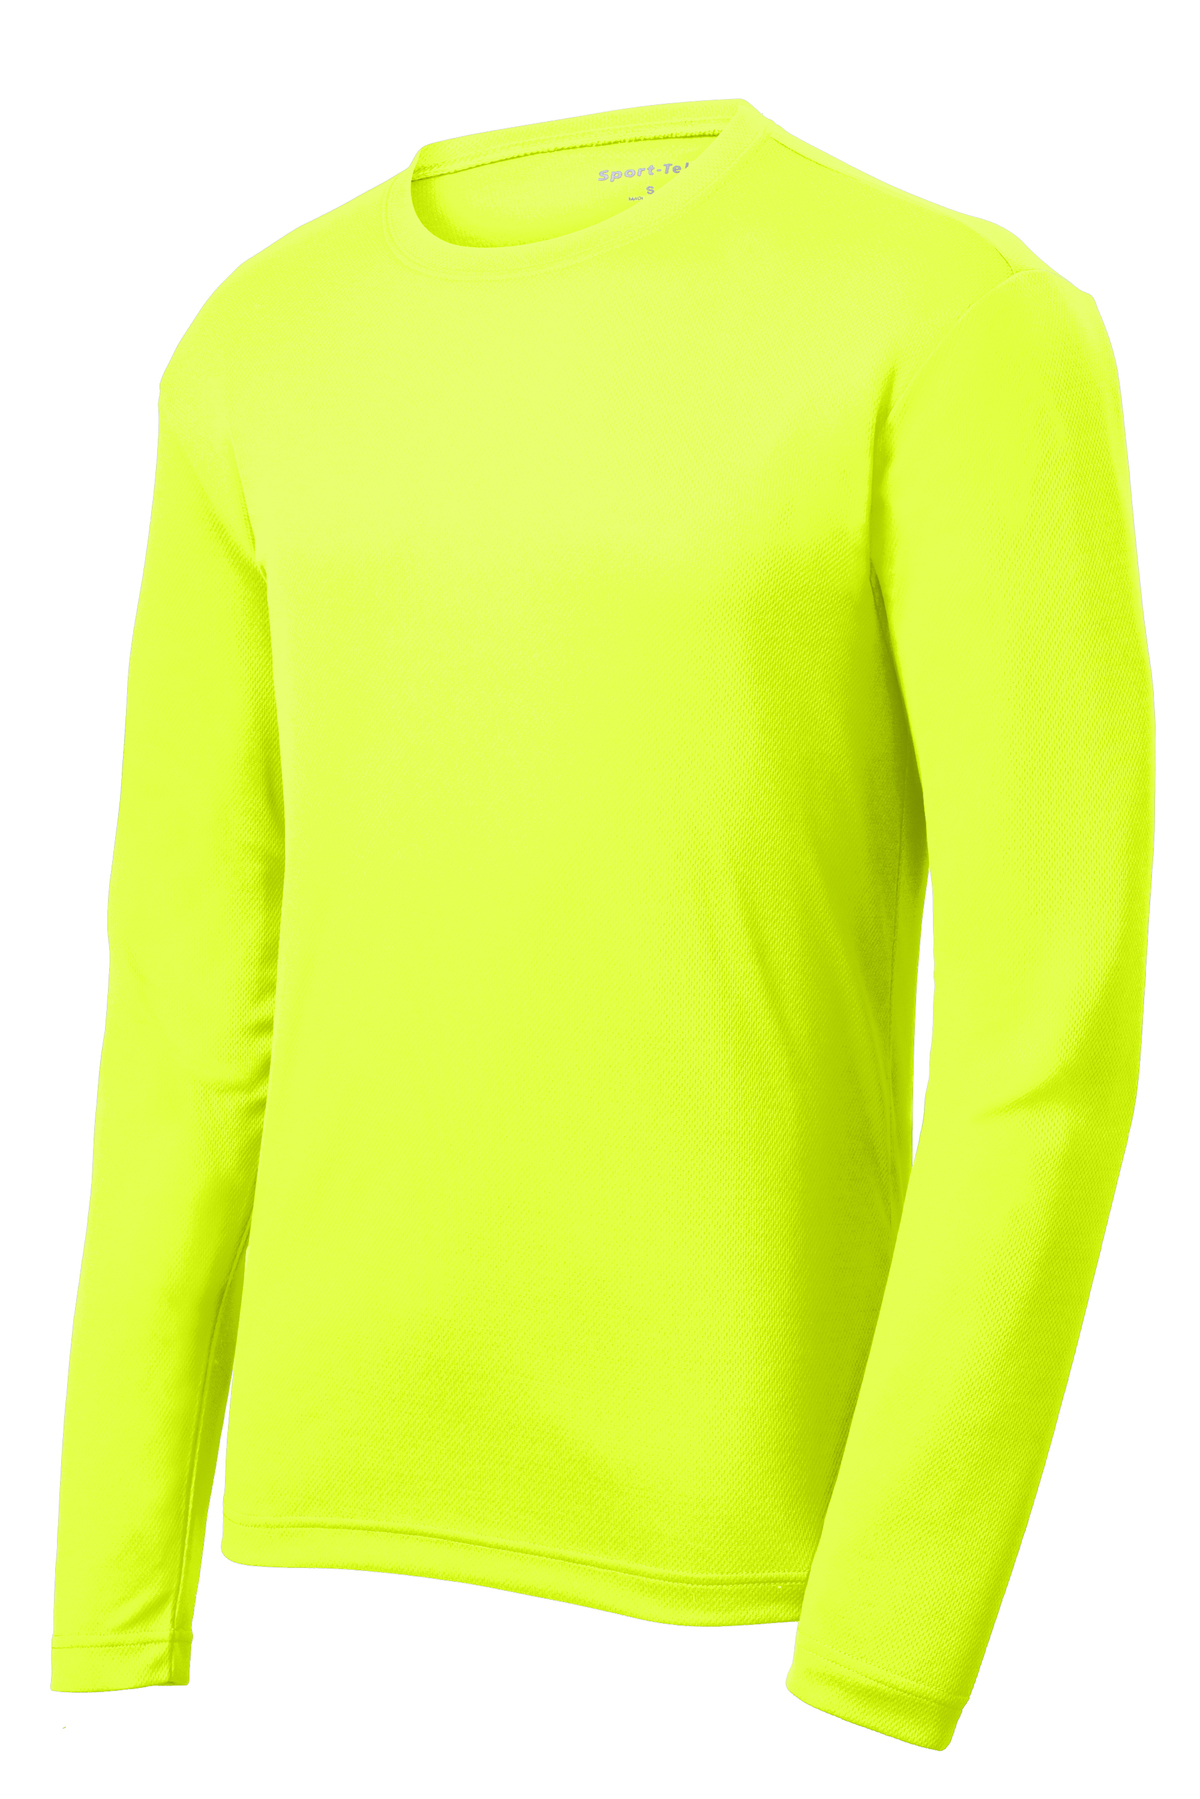  Sigma Sports Nexo Long Sleeve Padded Lightweight Paintball  Jersey Black/Yellow - HU-1192 (Medium) : Sports & Outdoors